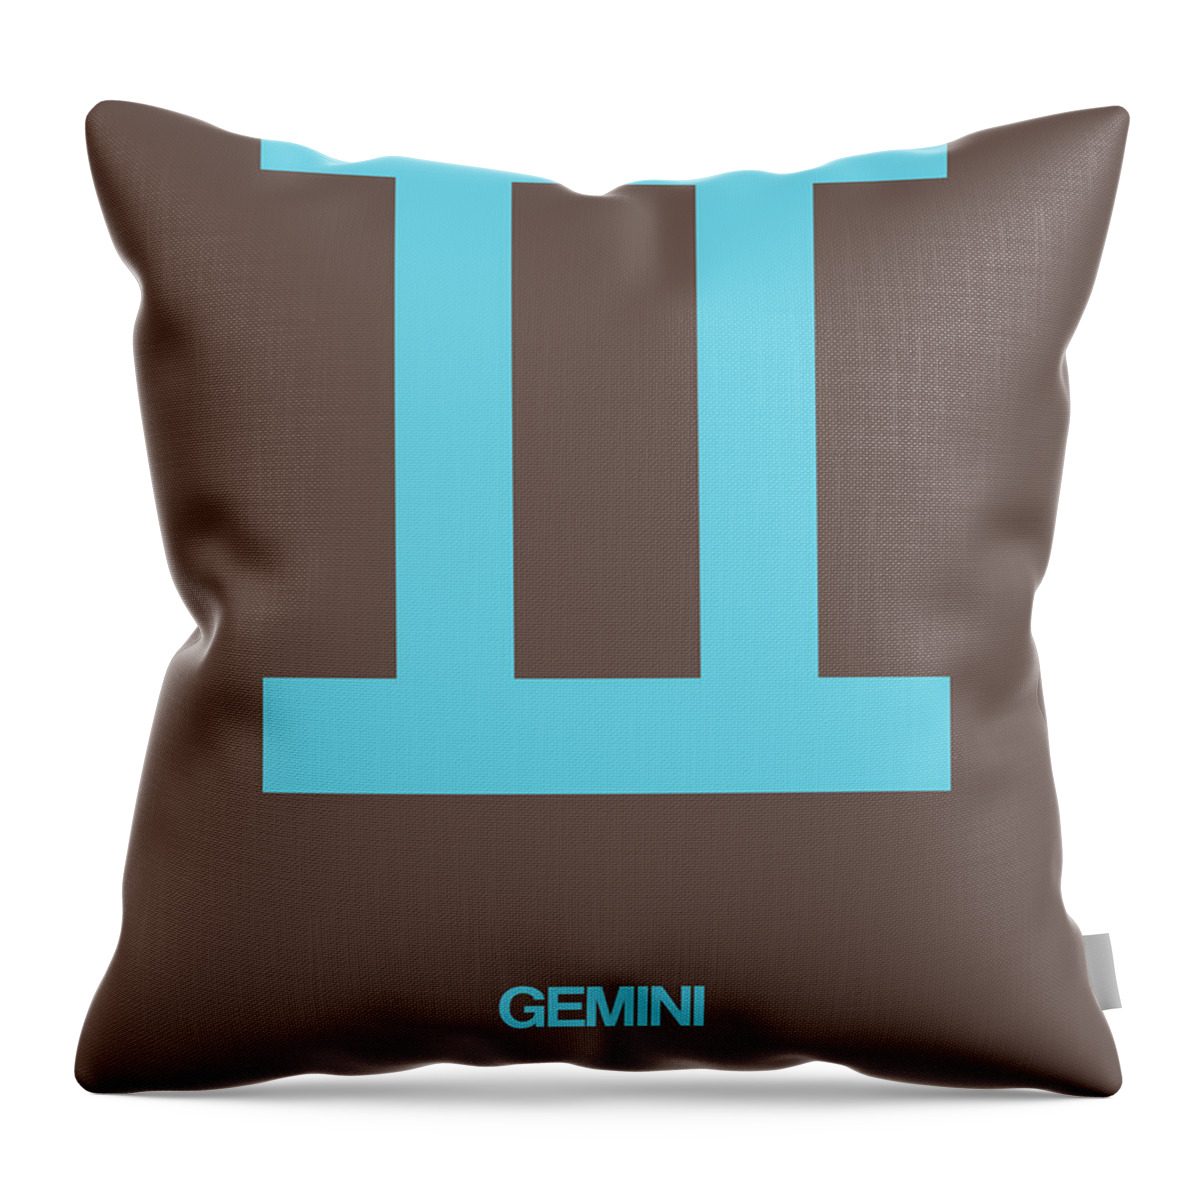 Gemini Throw Pillow featuring the digital art Gemini Zodiac Sign Blue by Naxart Studio